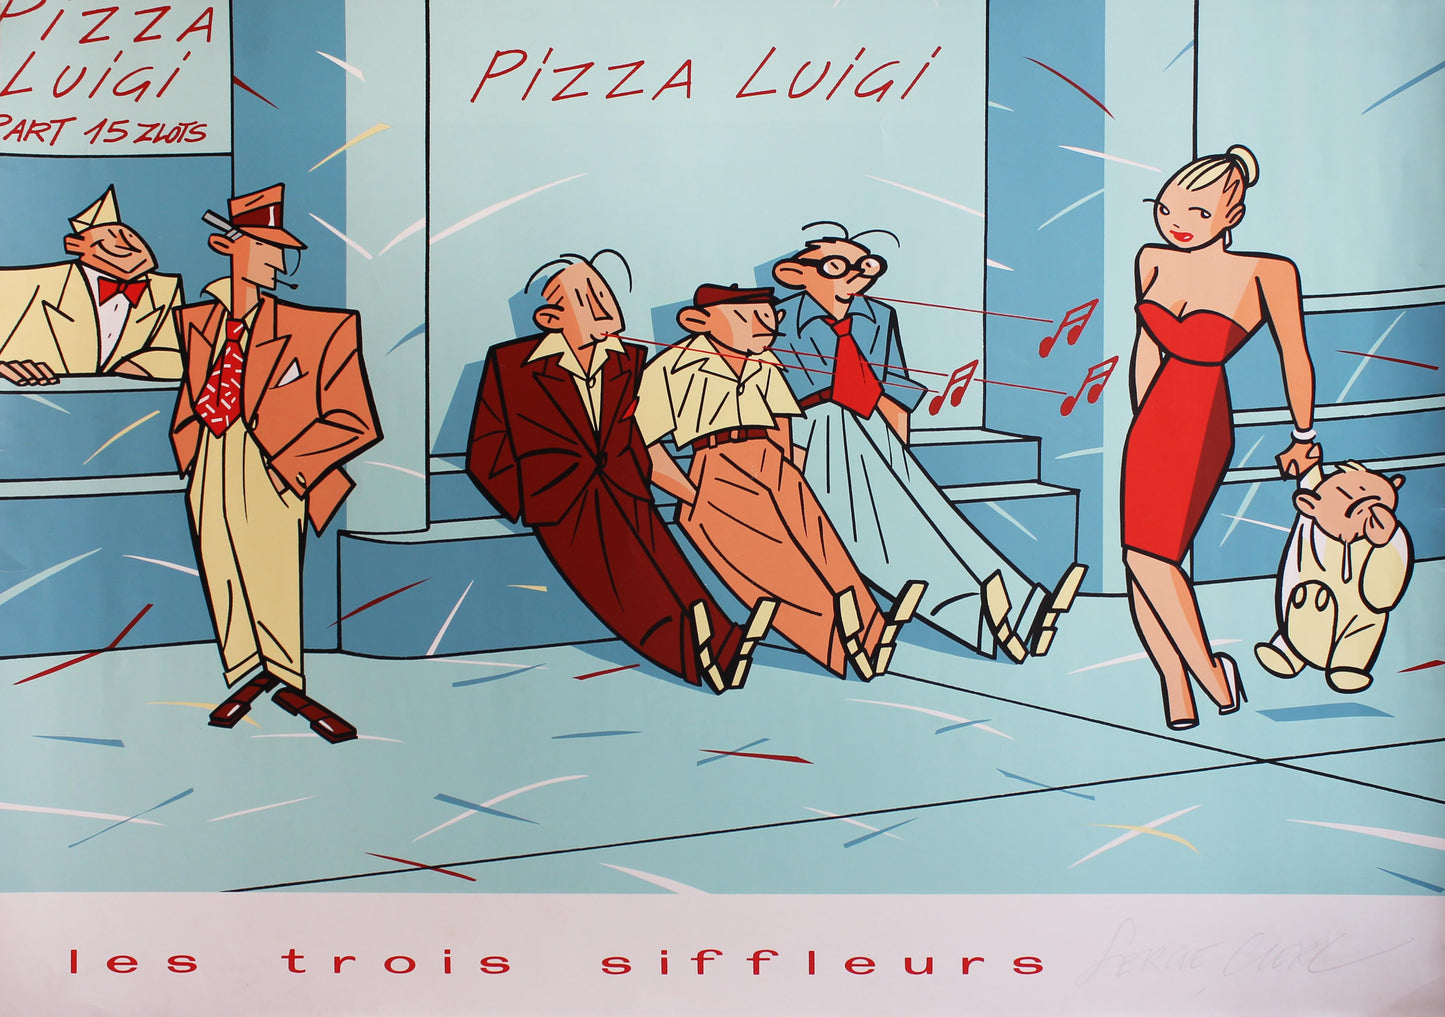 Pizza Luigi Les trois siffleurs - Offsetdruck von Serge Clerc